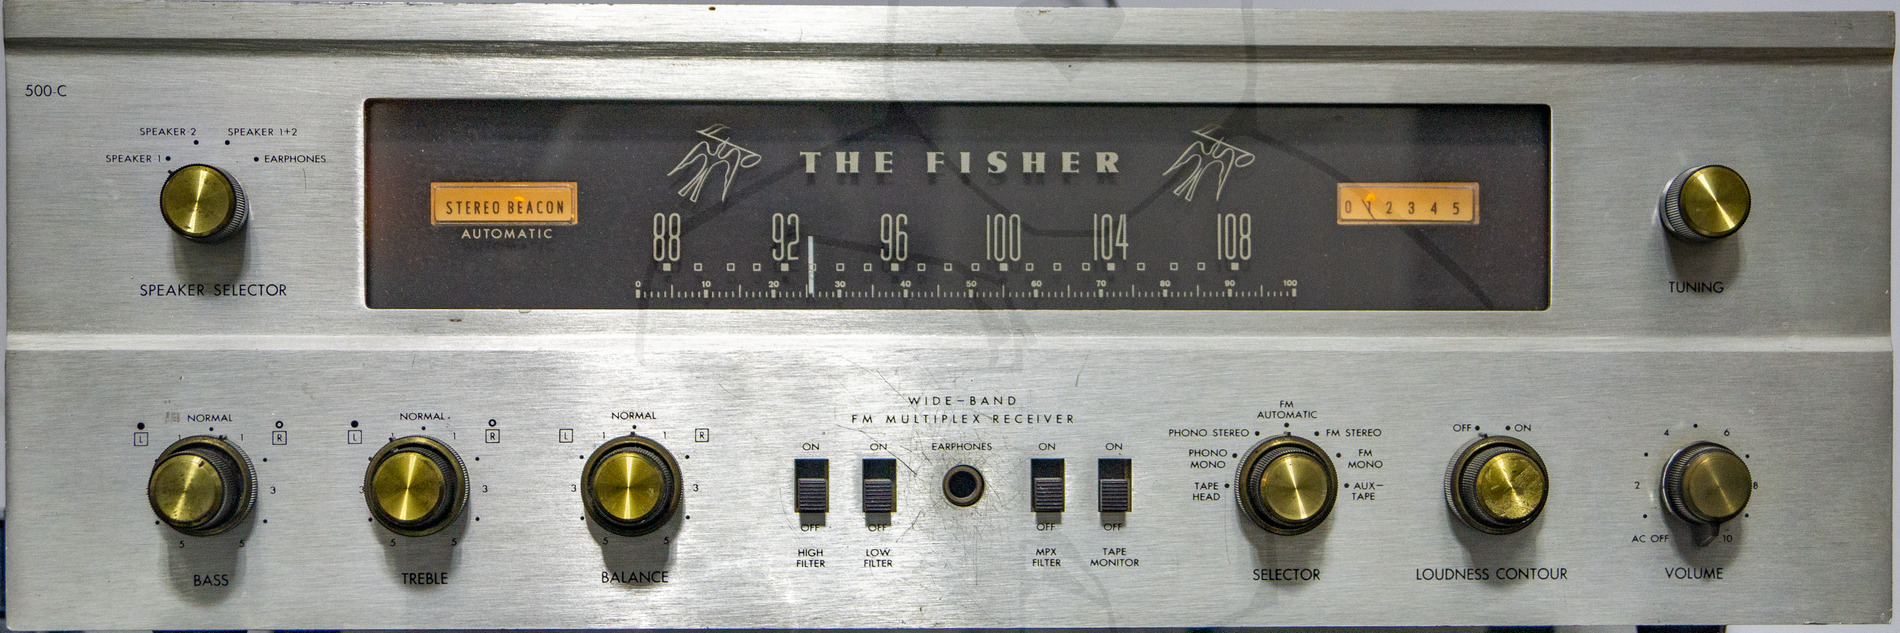 Fisher 500-C - Frontansicht in Betrieb